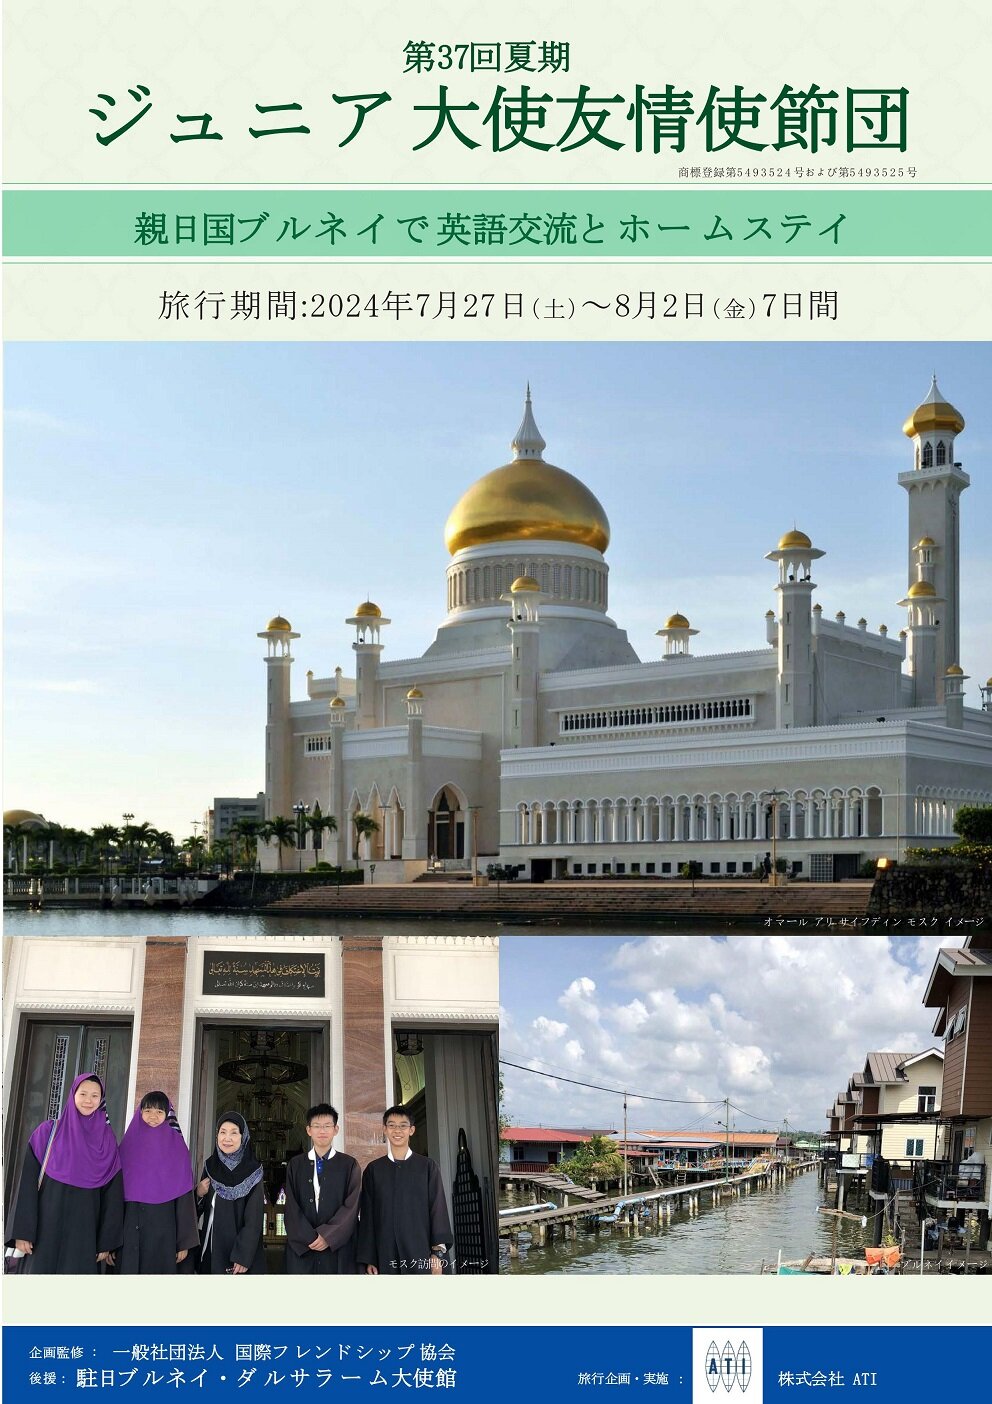 Brochure 37th Summer Junior Ambassadorial Friendship Mission to Brunei.jpg